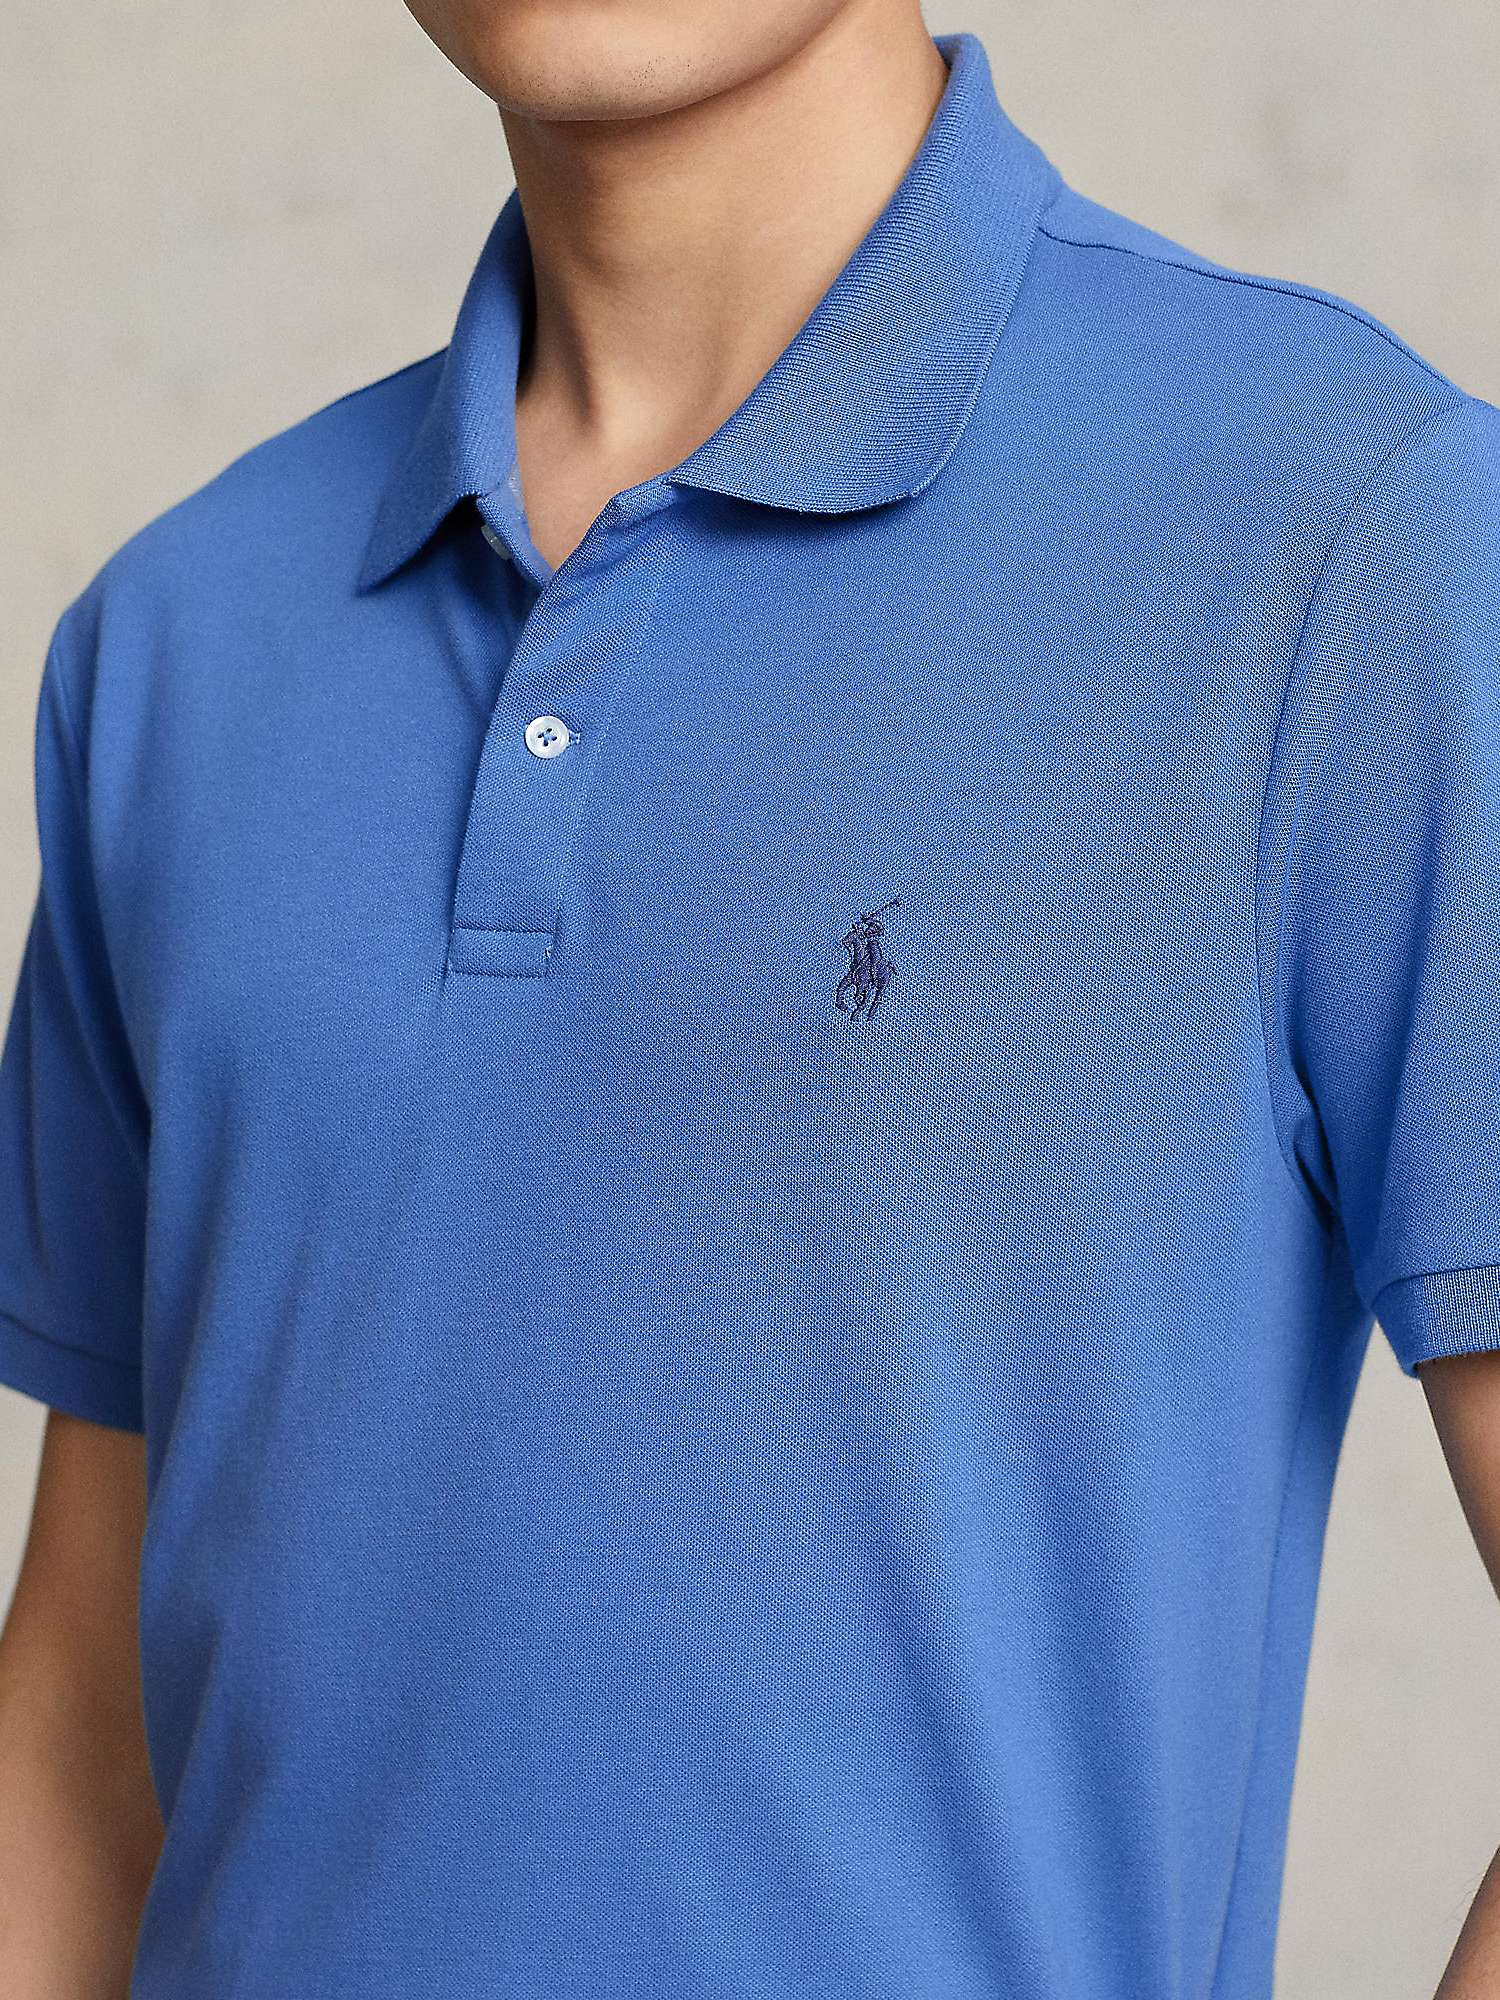 Polo Golf by Ralph Lauren Polo Shirt, Retreat Blue/c7998 at John Lewis ...